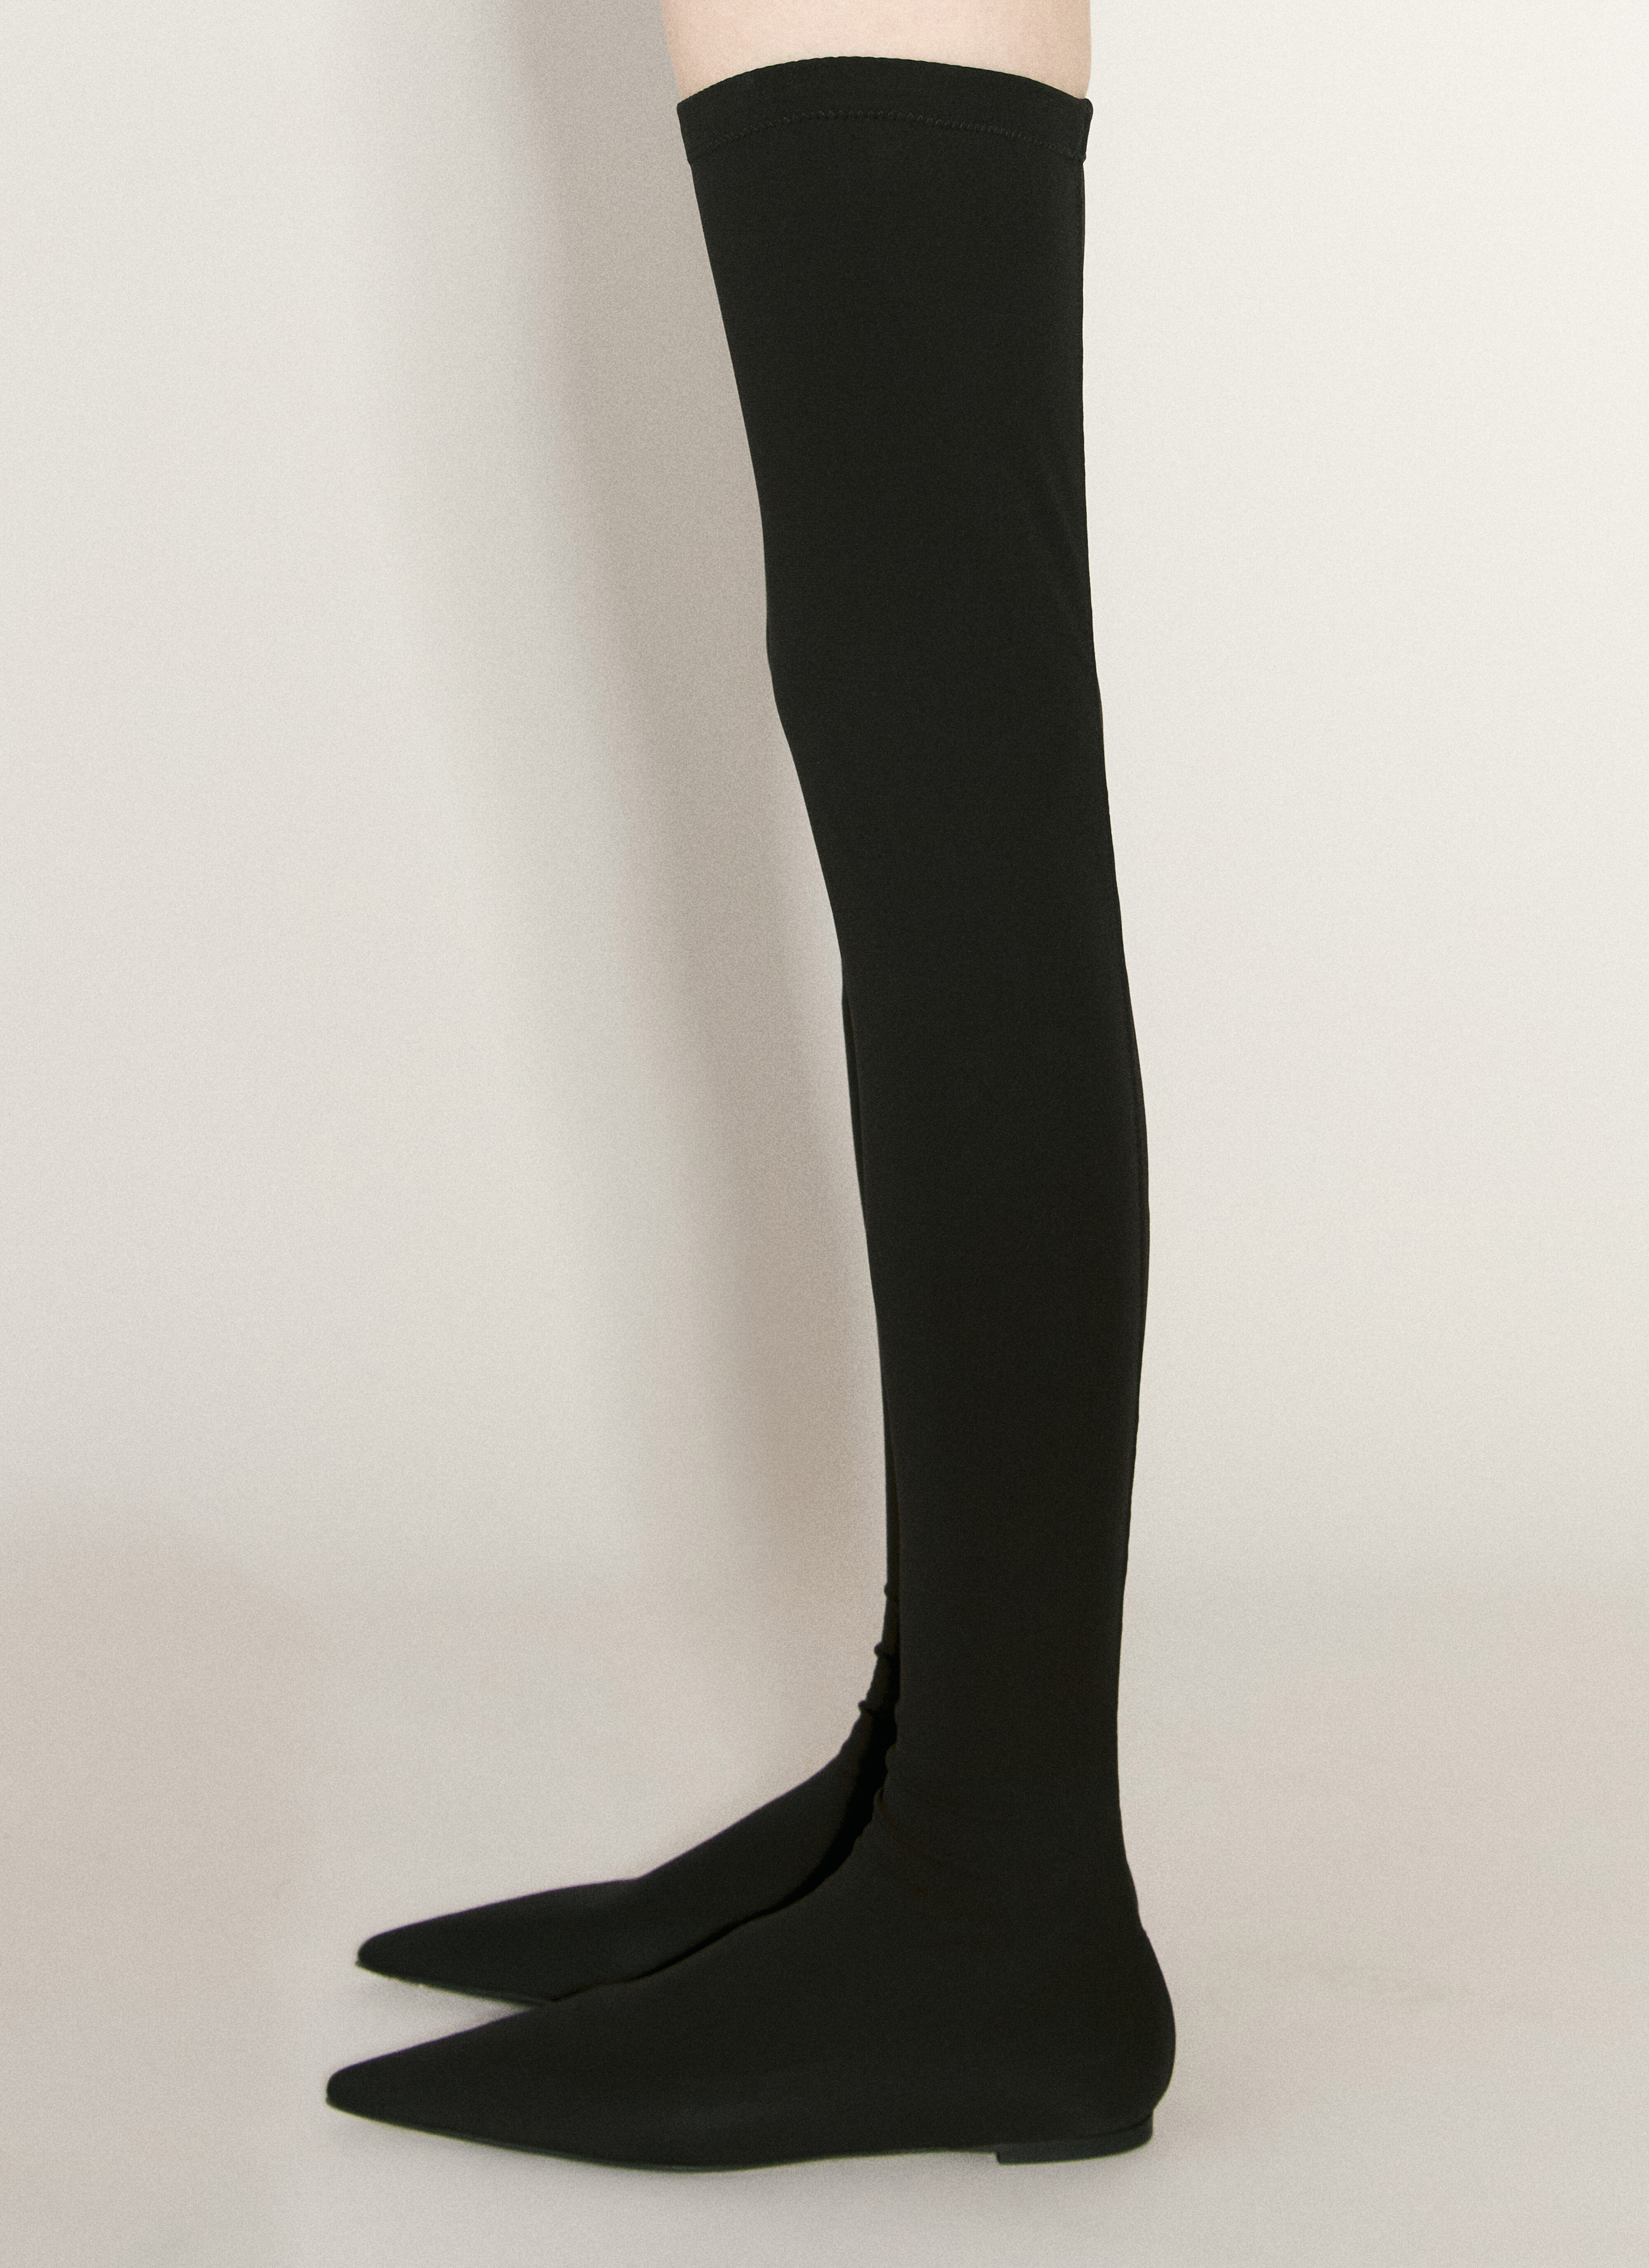 Miista Tigh-High Jersey Boots Black mii0256001